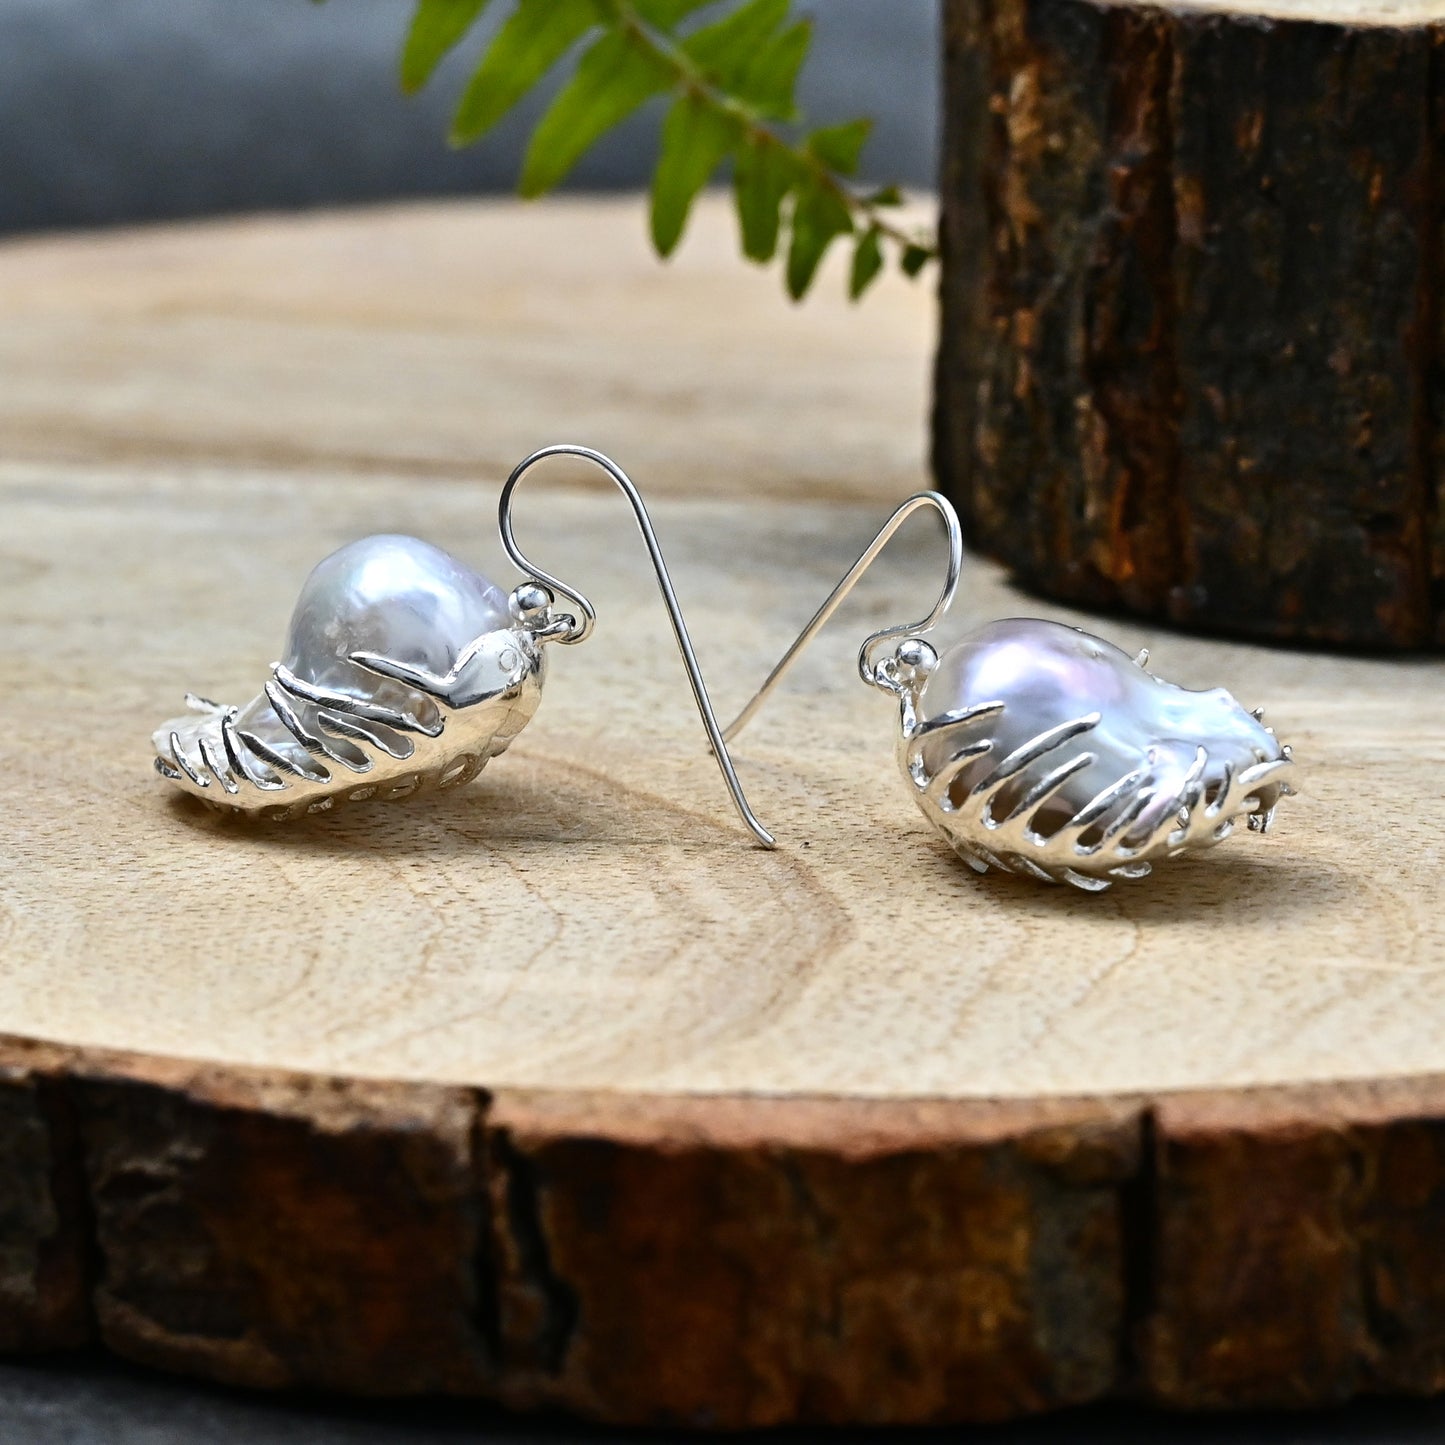 Baroque Pearl Claw Earrings!